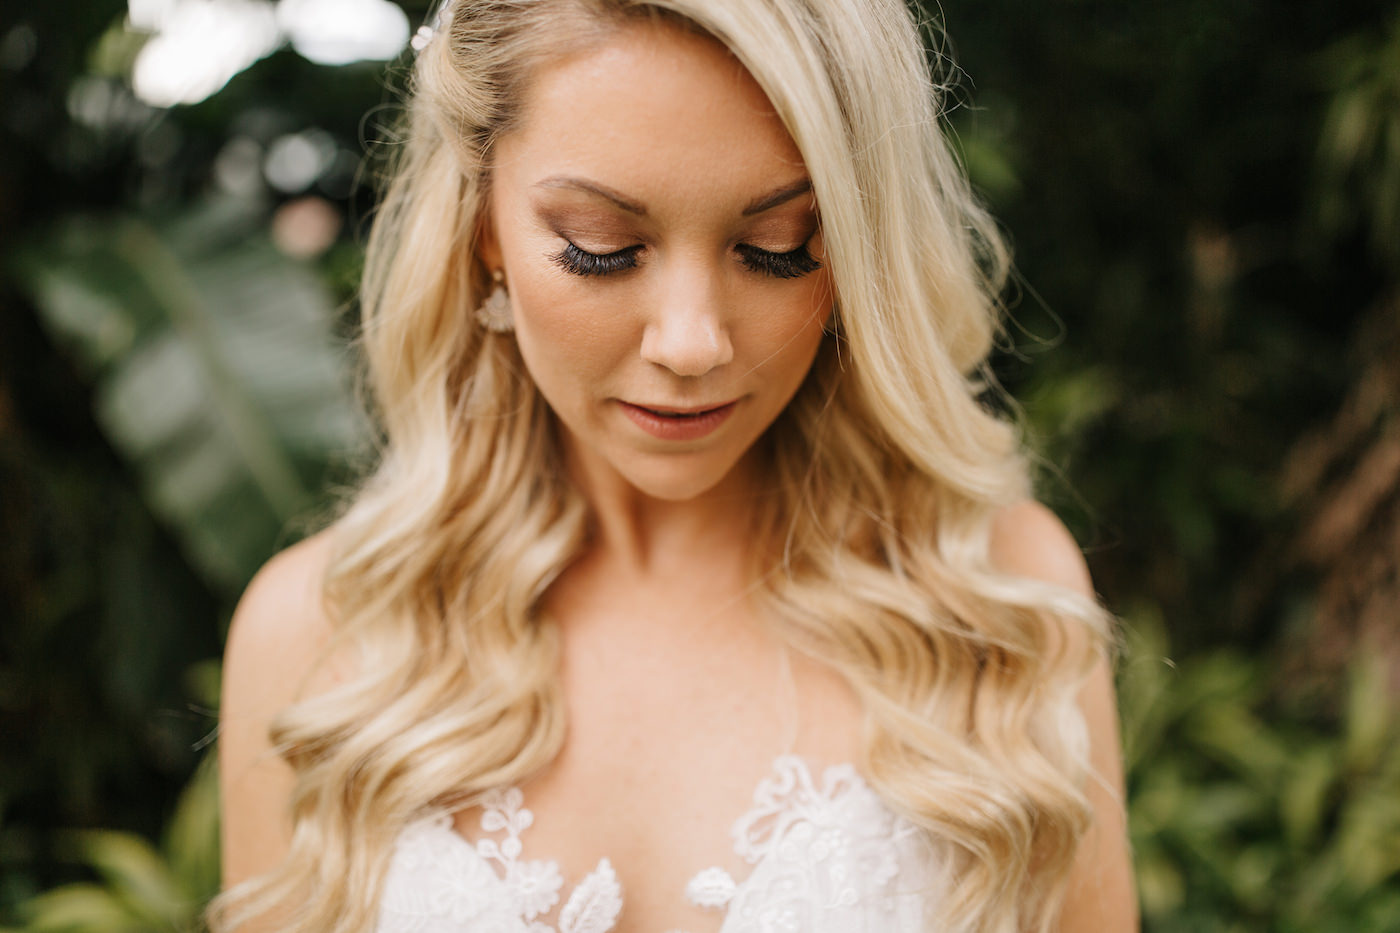 Boho Chic Inspired Florida Bride, Ashley Stegbauer Morrison Neutral Makeup and Wavy Bridal Hair